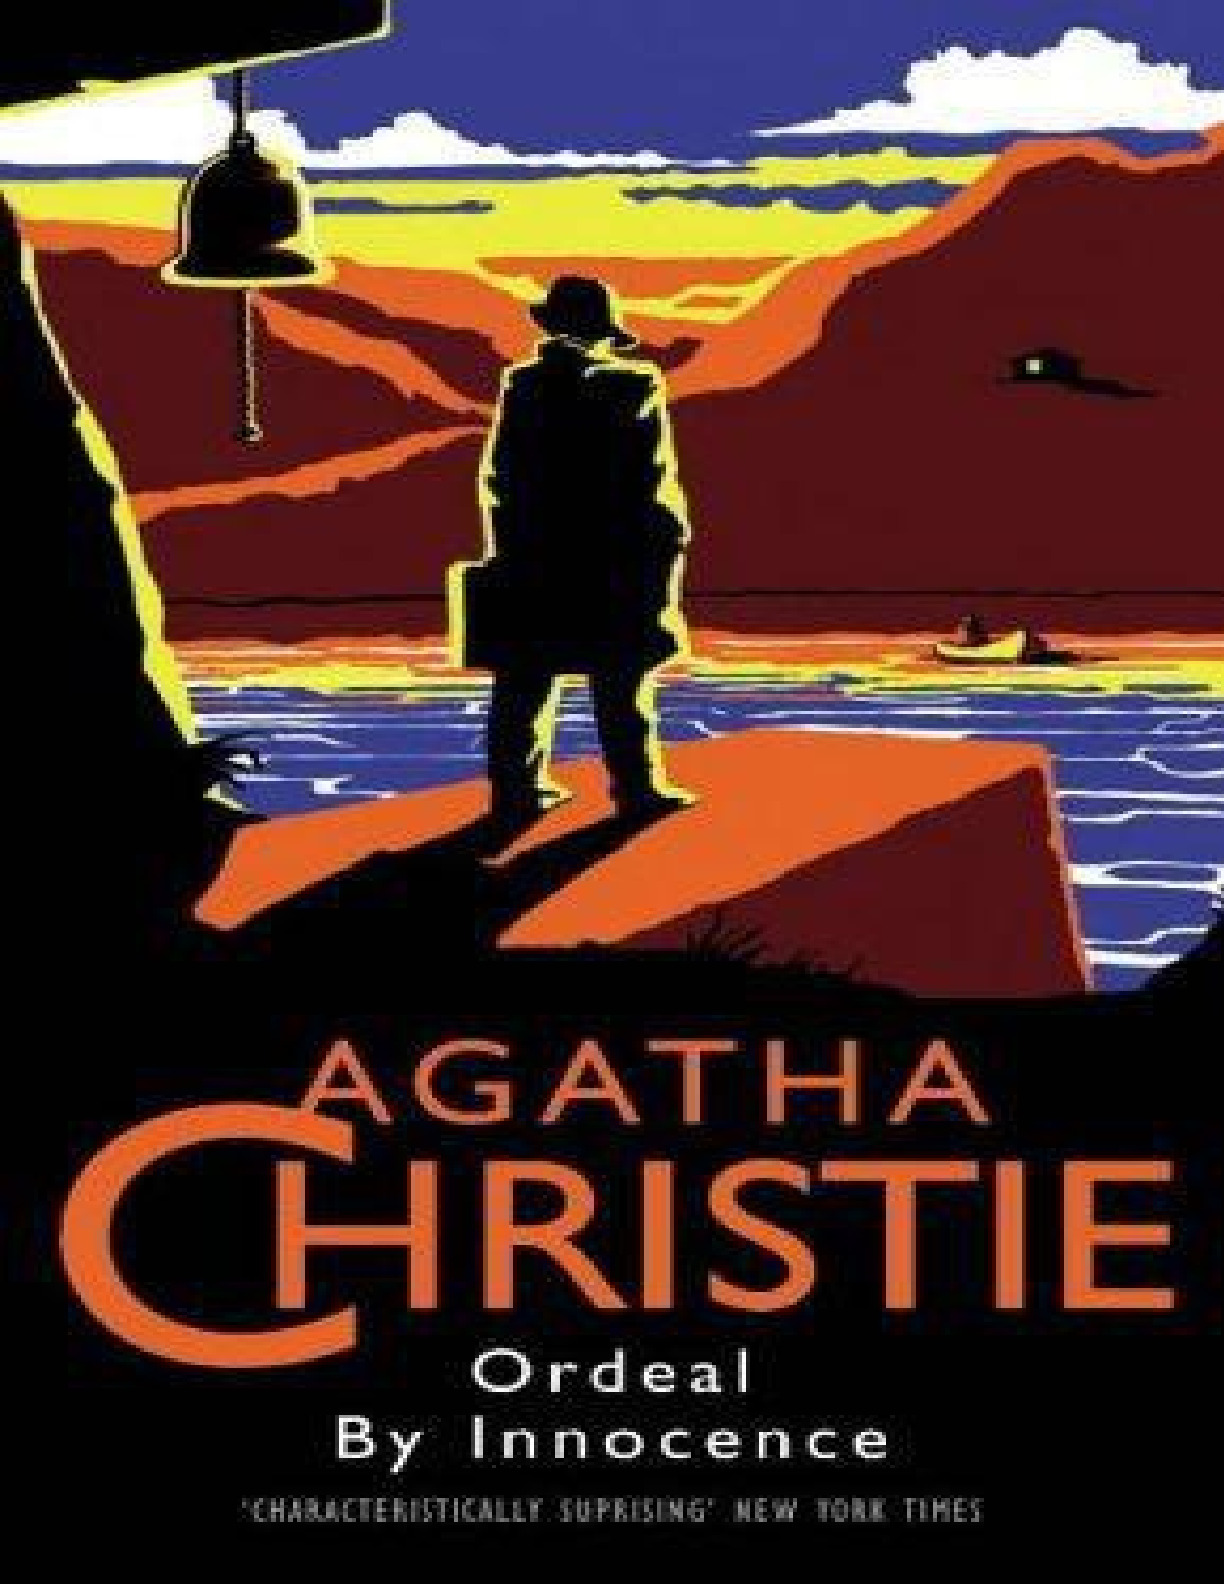 Ordeal by innocence – Agatha Christie